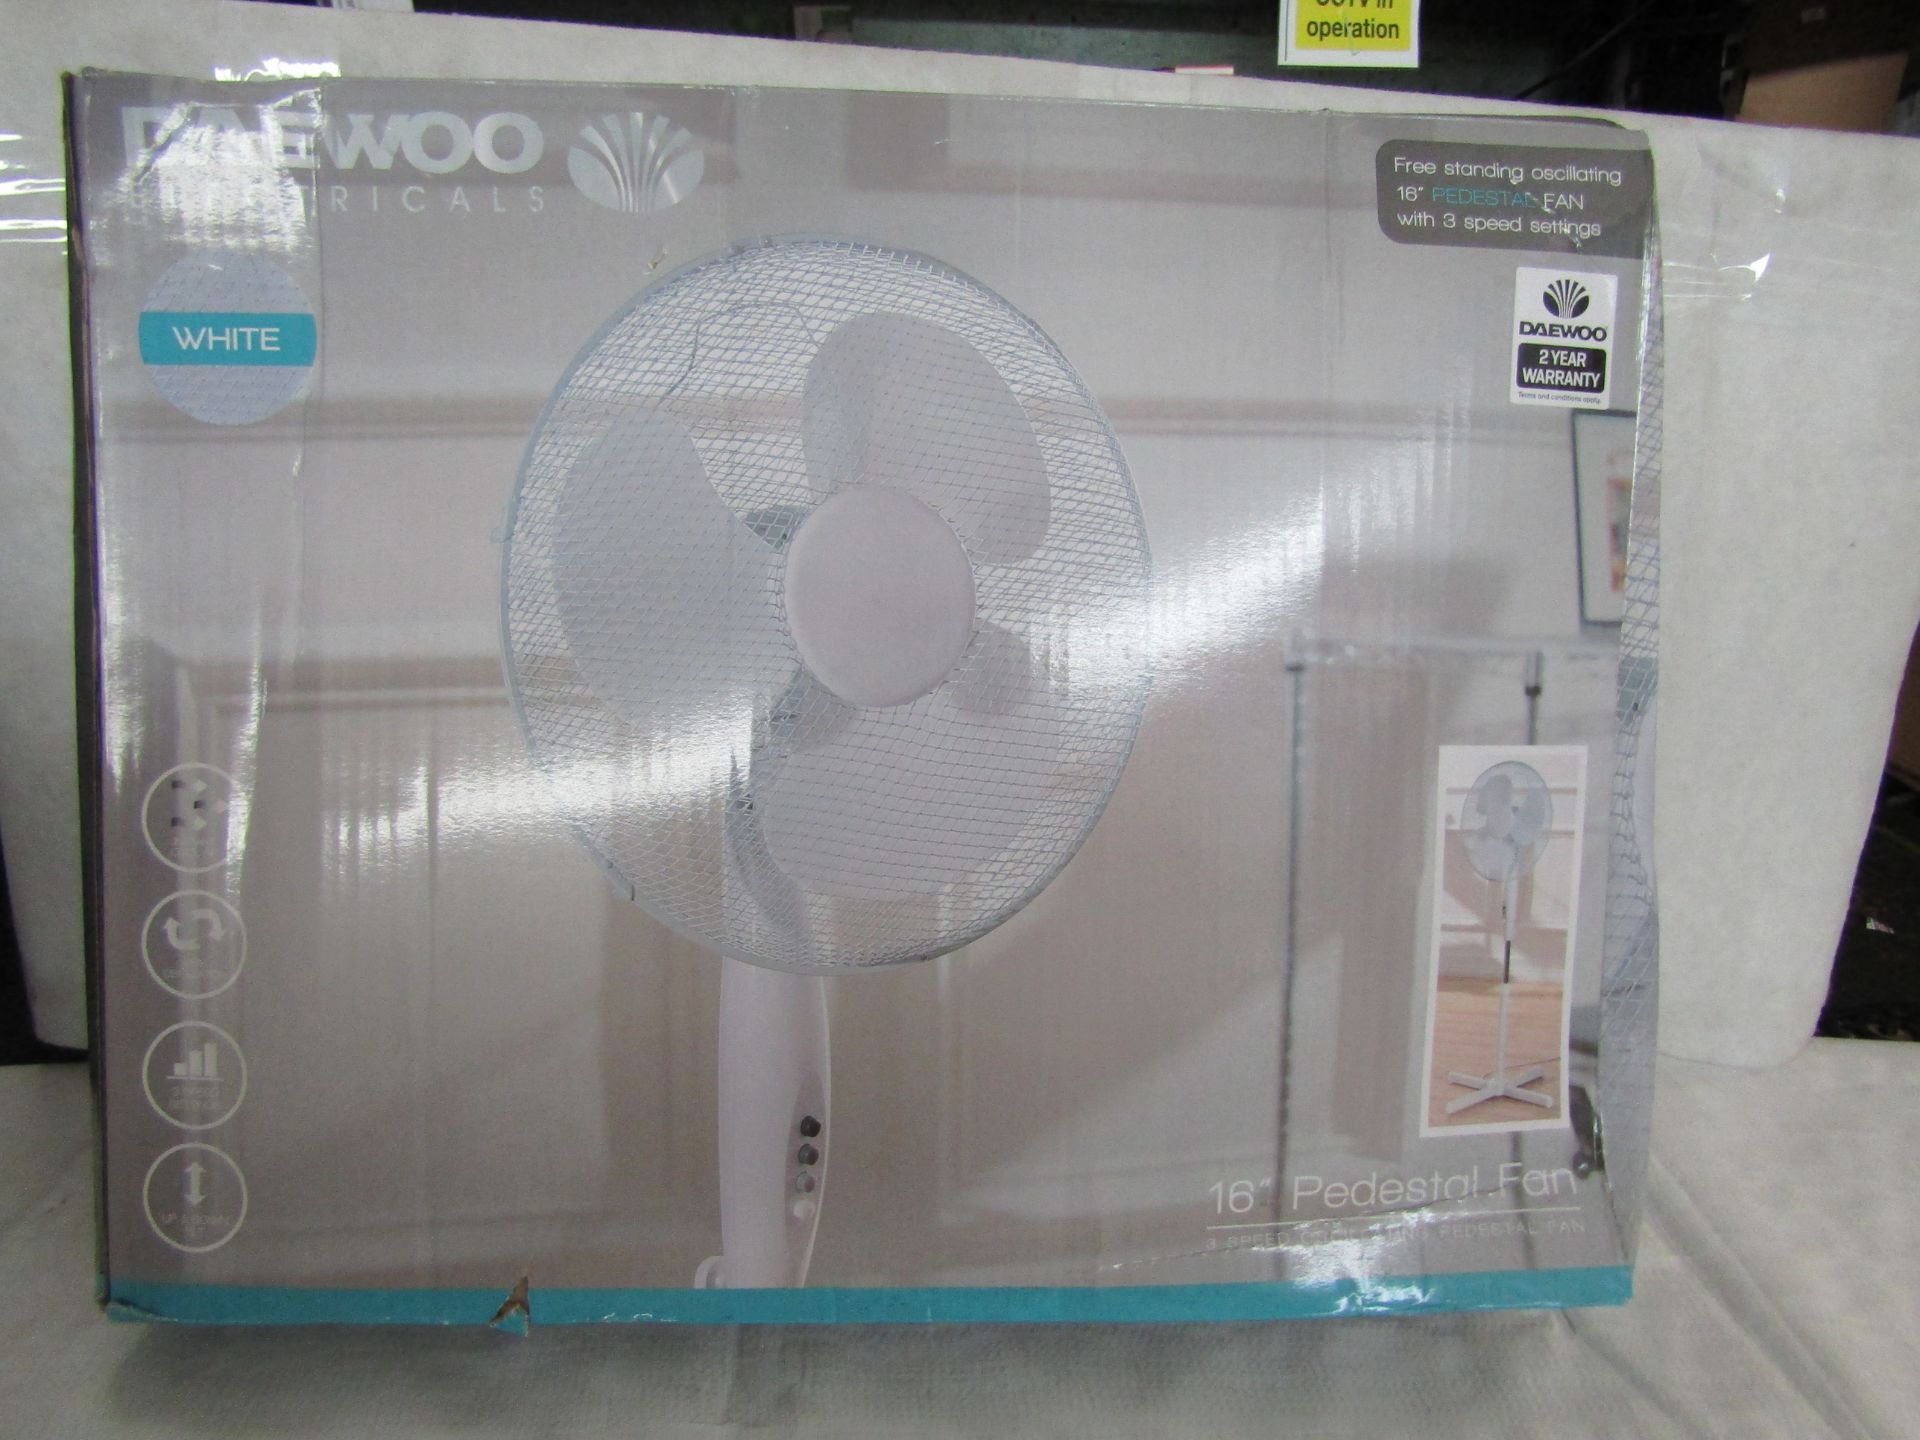 Daewoo - White 16" Floor Pedestal Fan - Untested & Boxed.